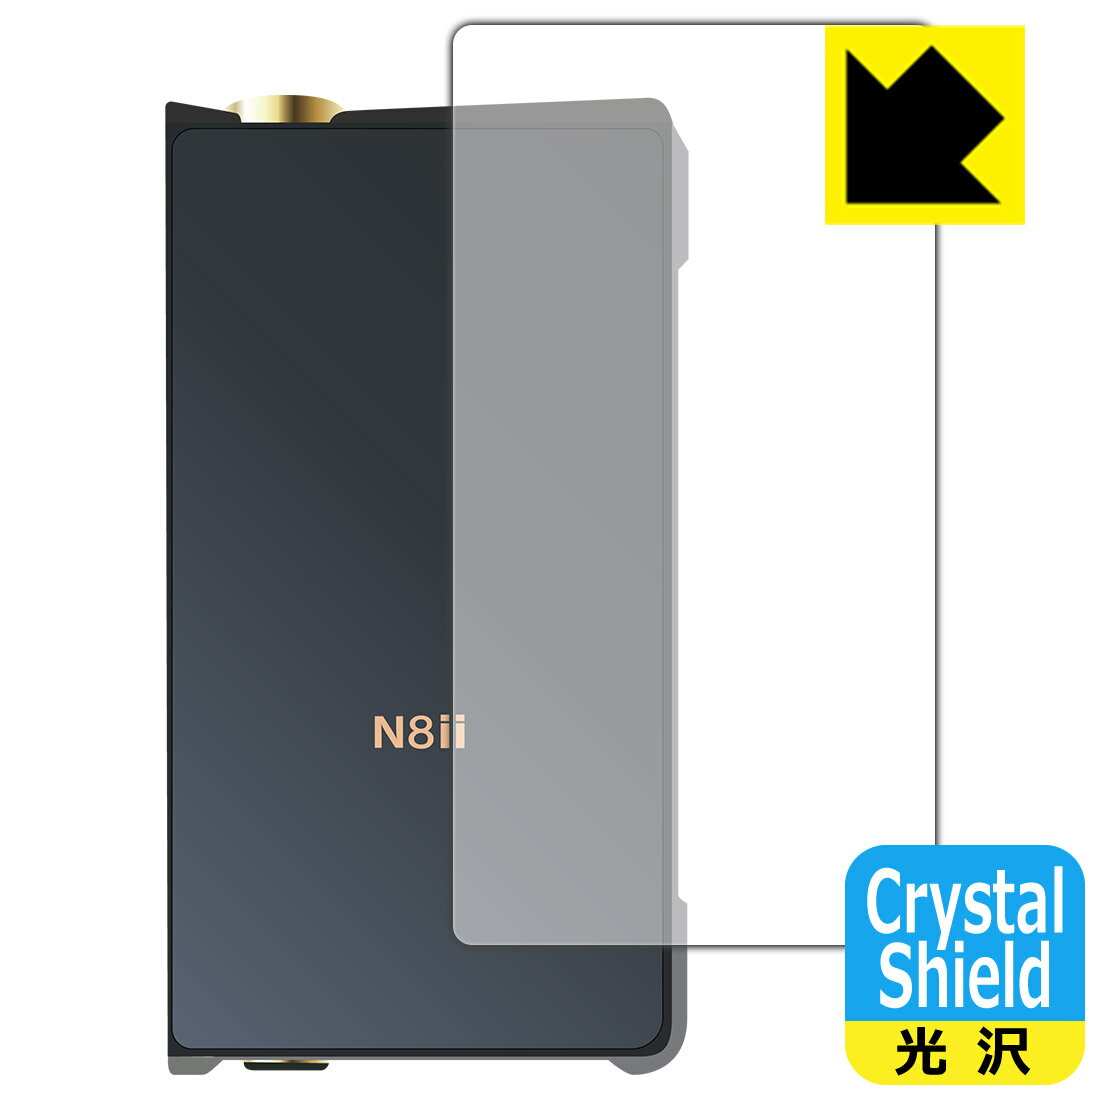 Crystal Shield【光沢】保護フィルム Cayin N8ii (背面のみ) 日本製 自社製造直販